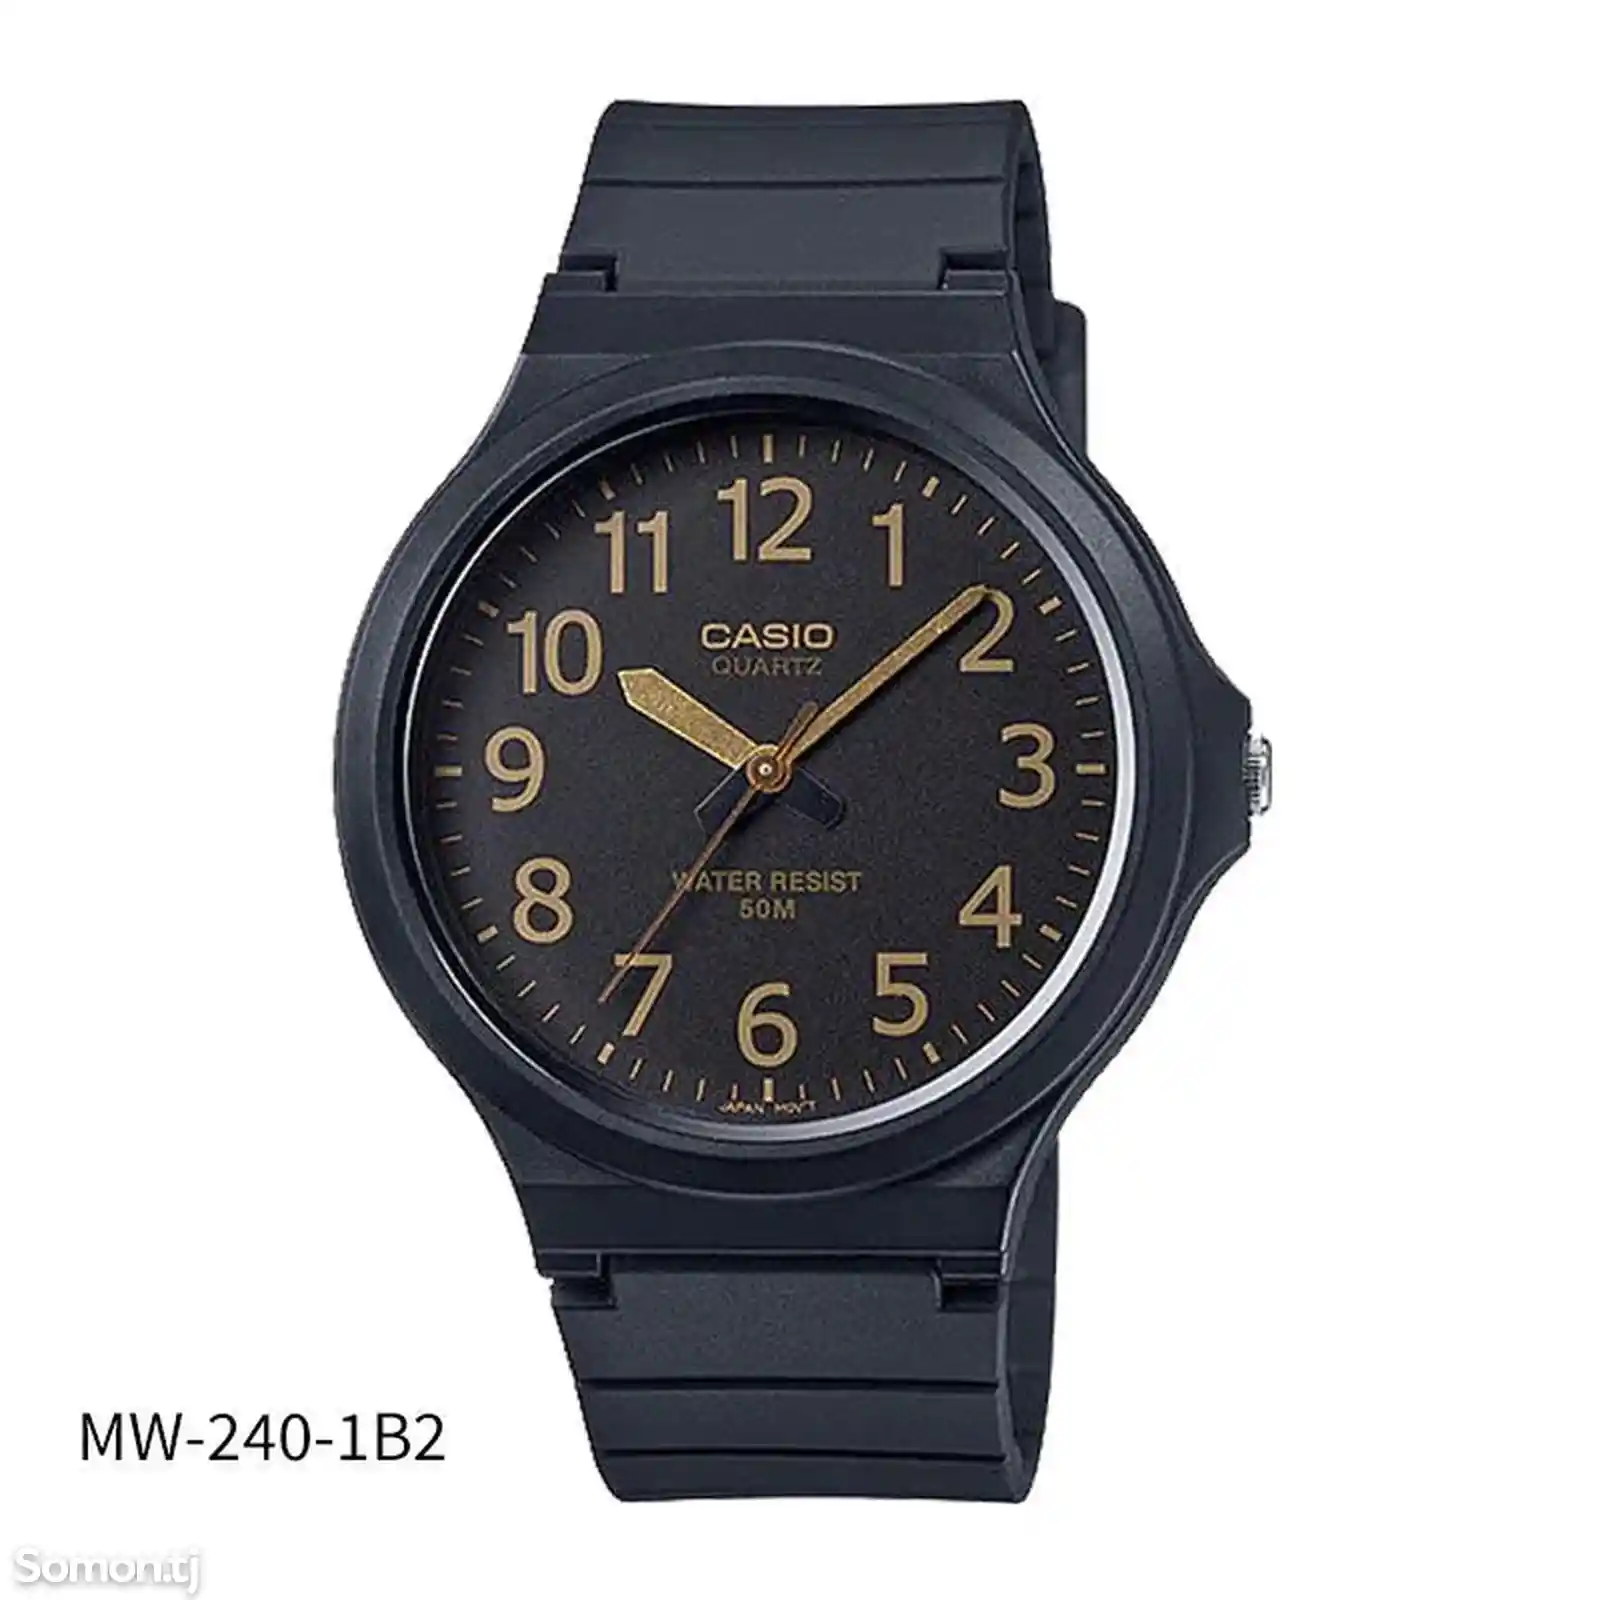 Мужские часы Casio MW-240-1B2-1